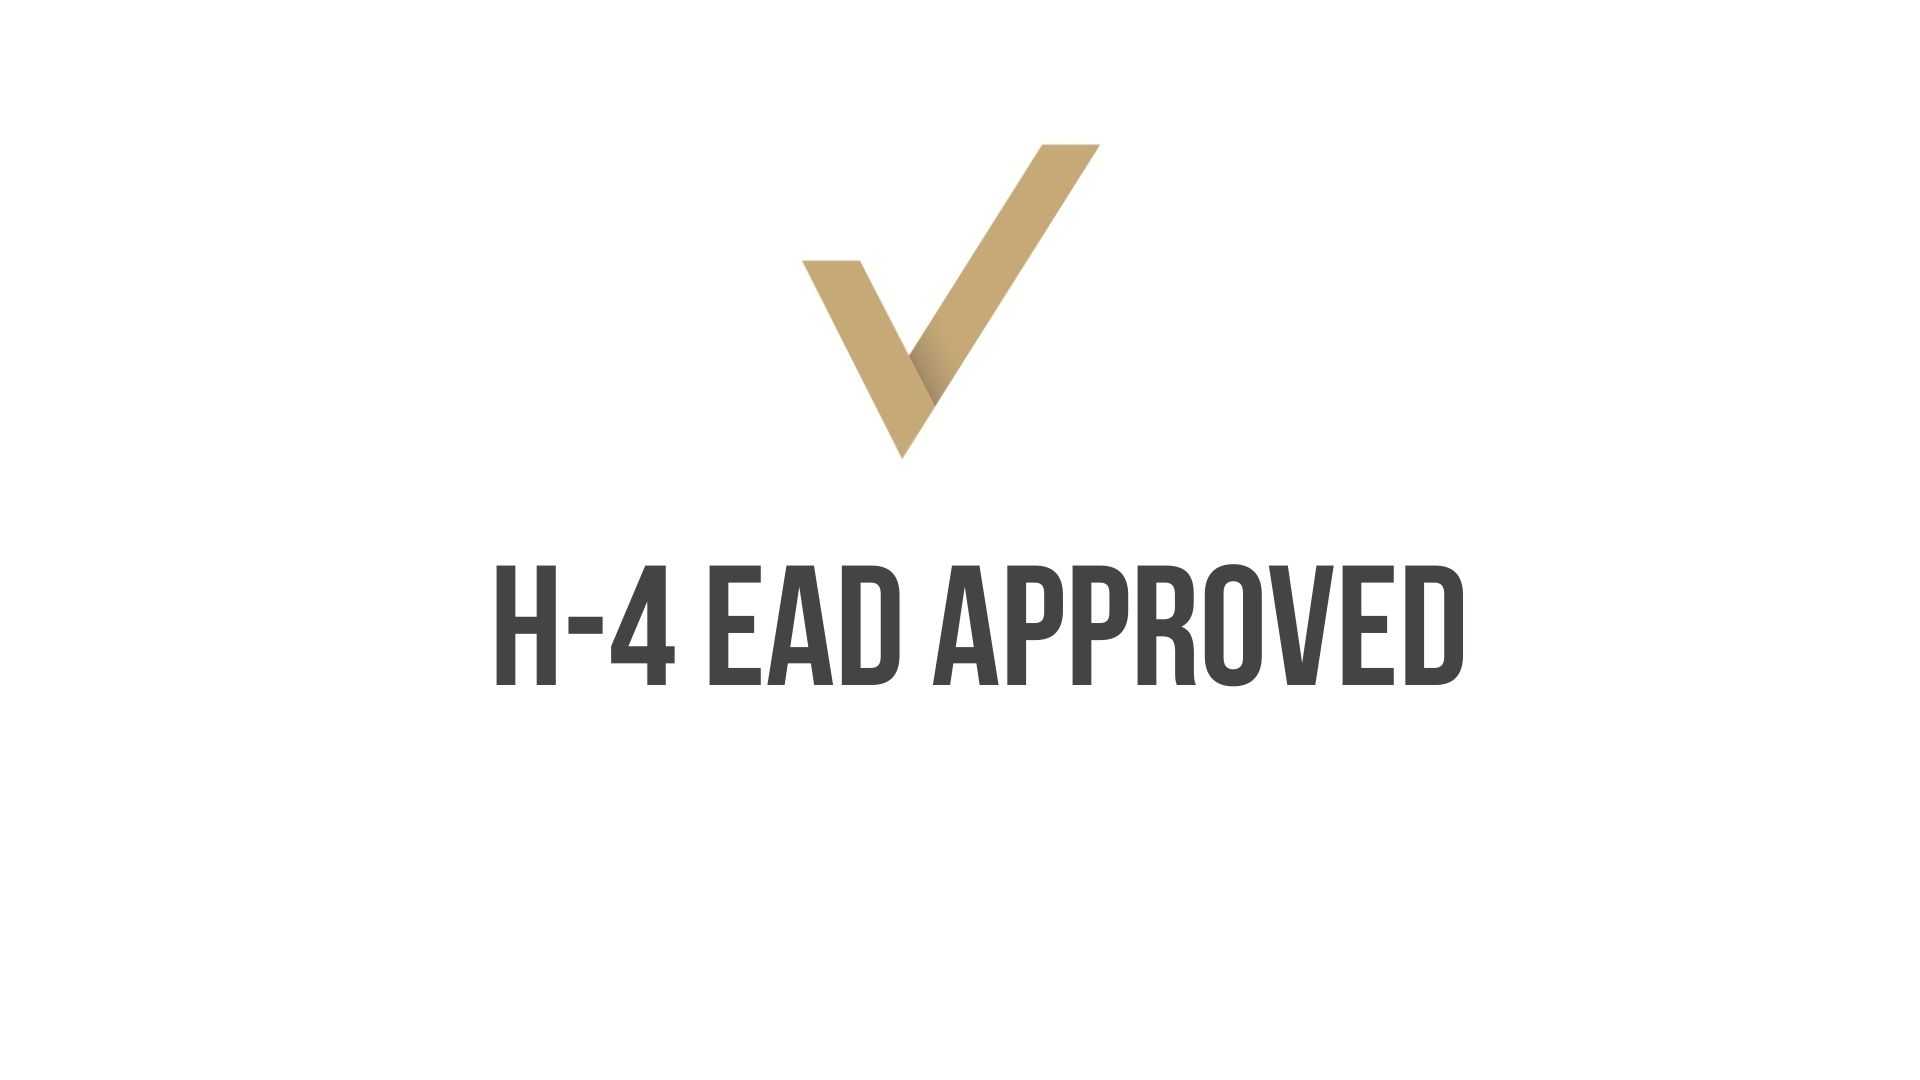 EAD Approval for H-4 Visa Holder in Charleston